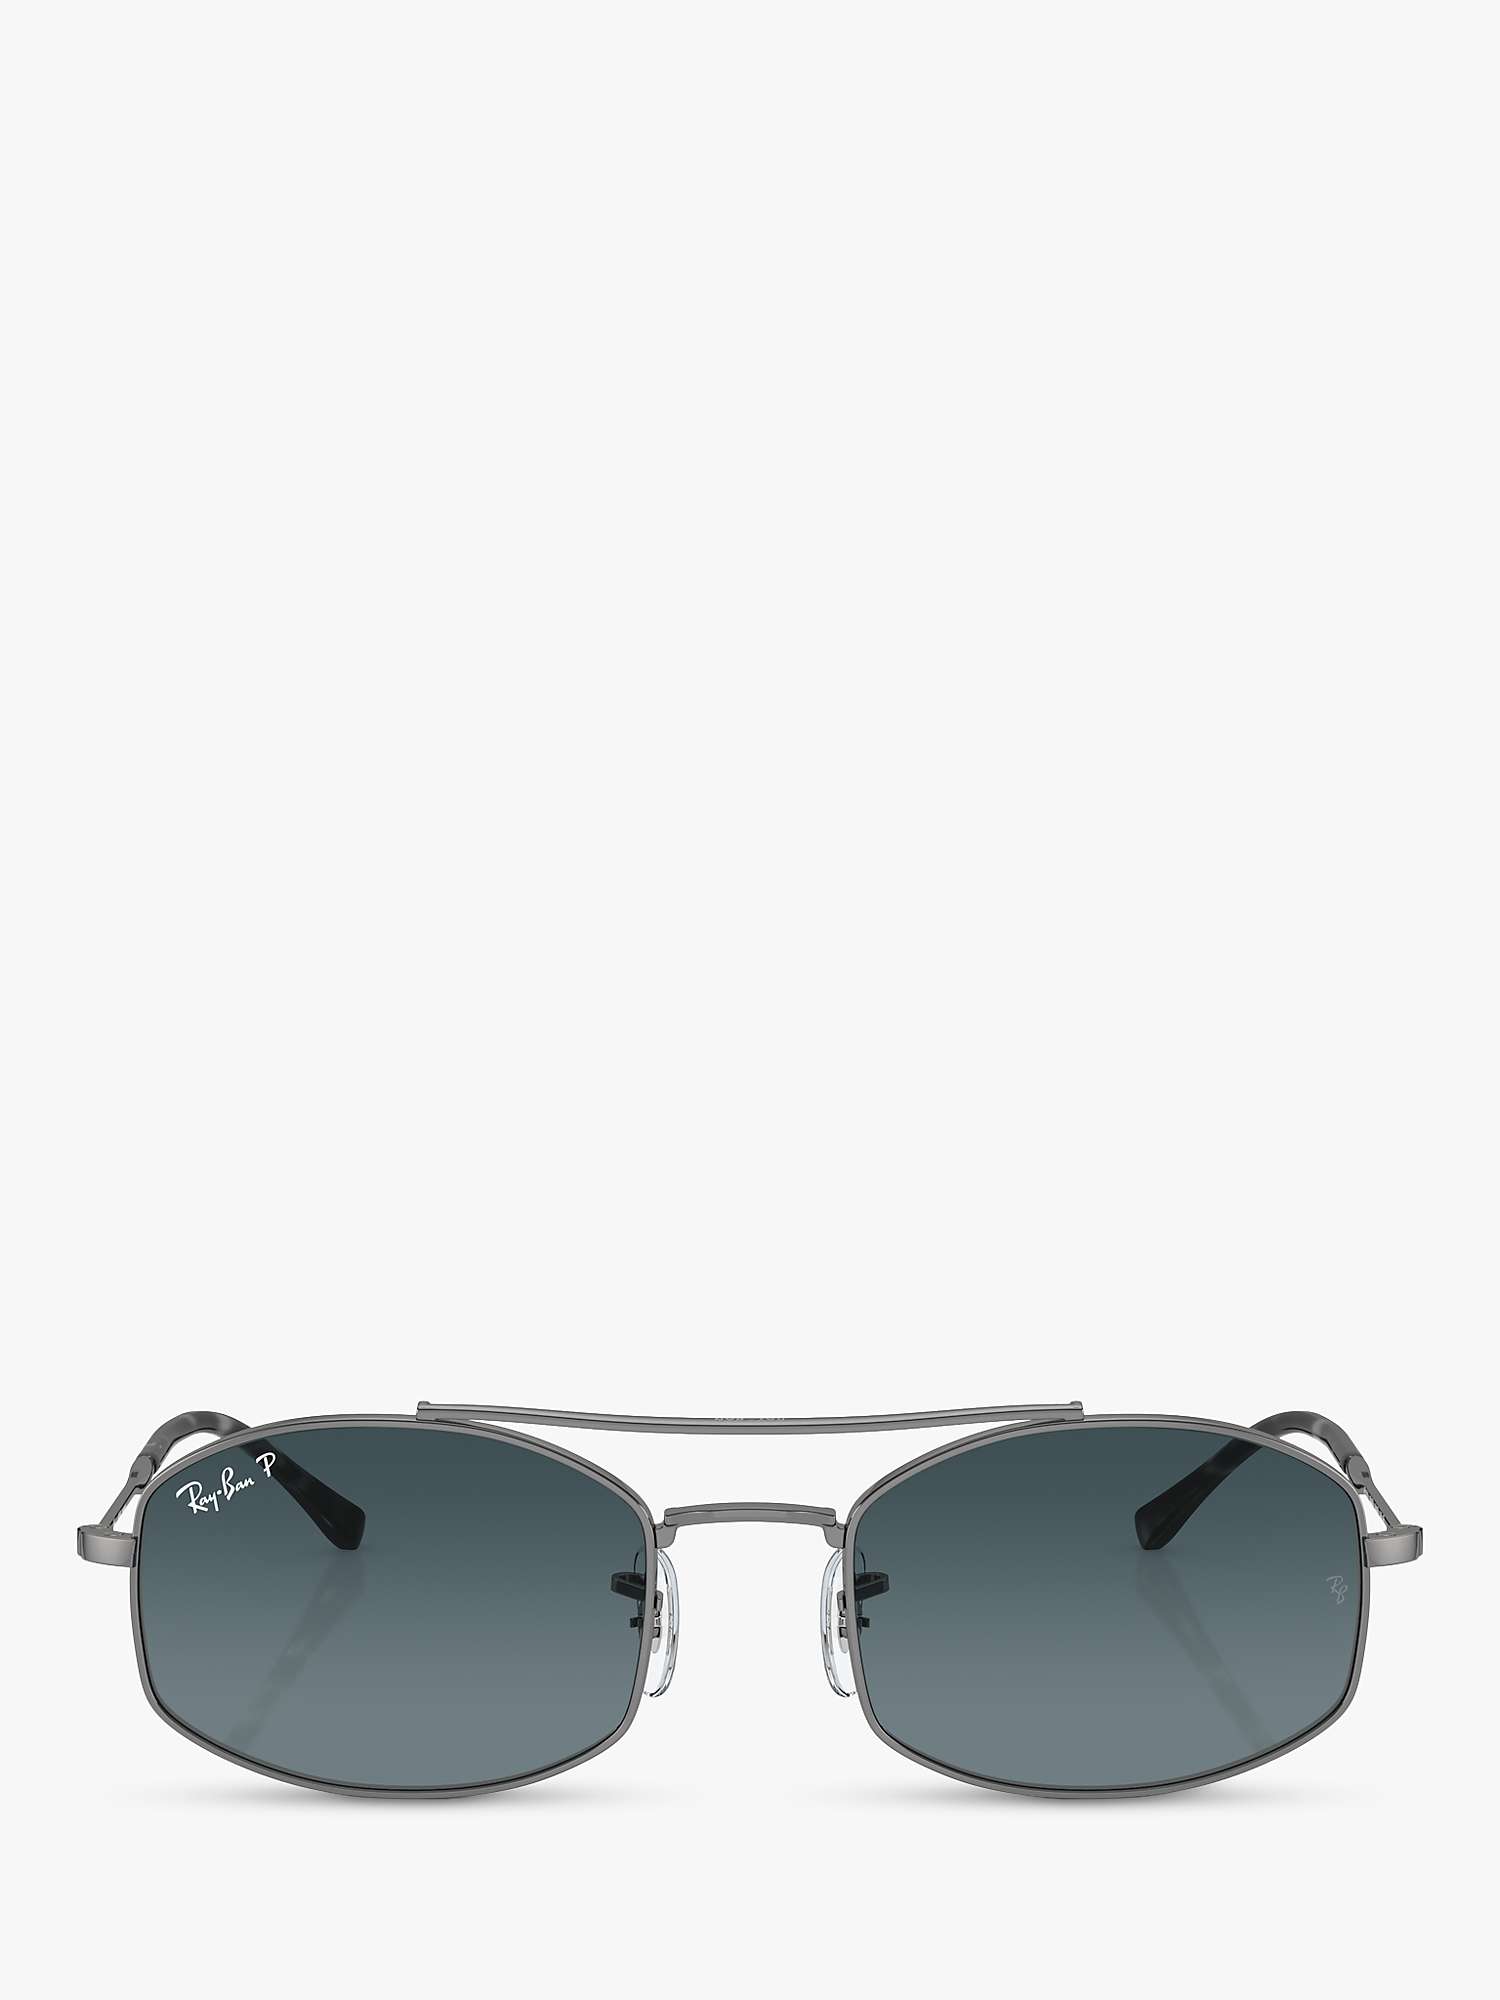 Buy Ray-Ban RB37190 Unisex Polarised Oval Sunglasses, Gunmetal/Blue Gradient Online at johnlewis.com